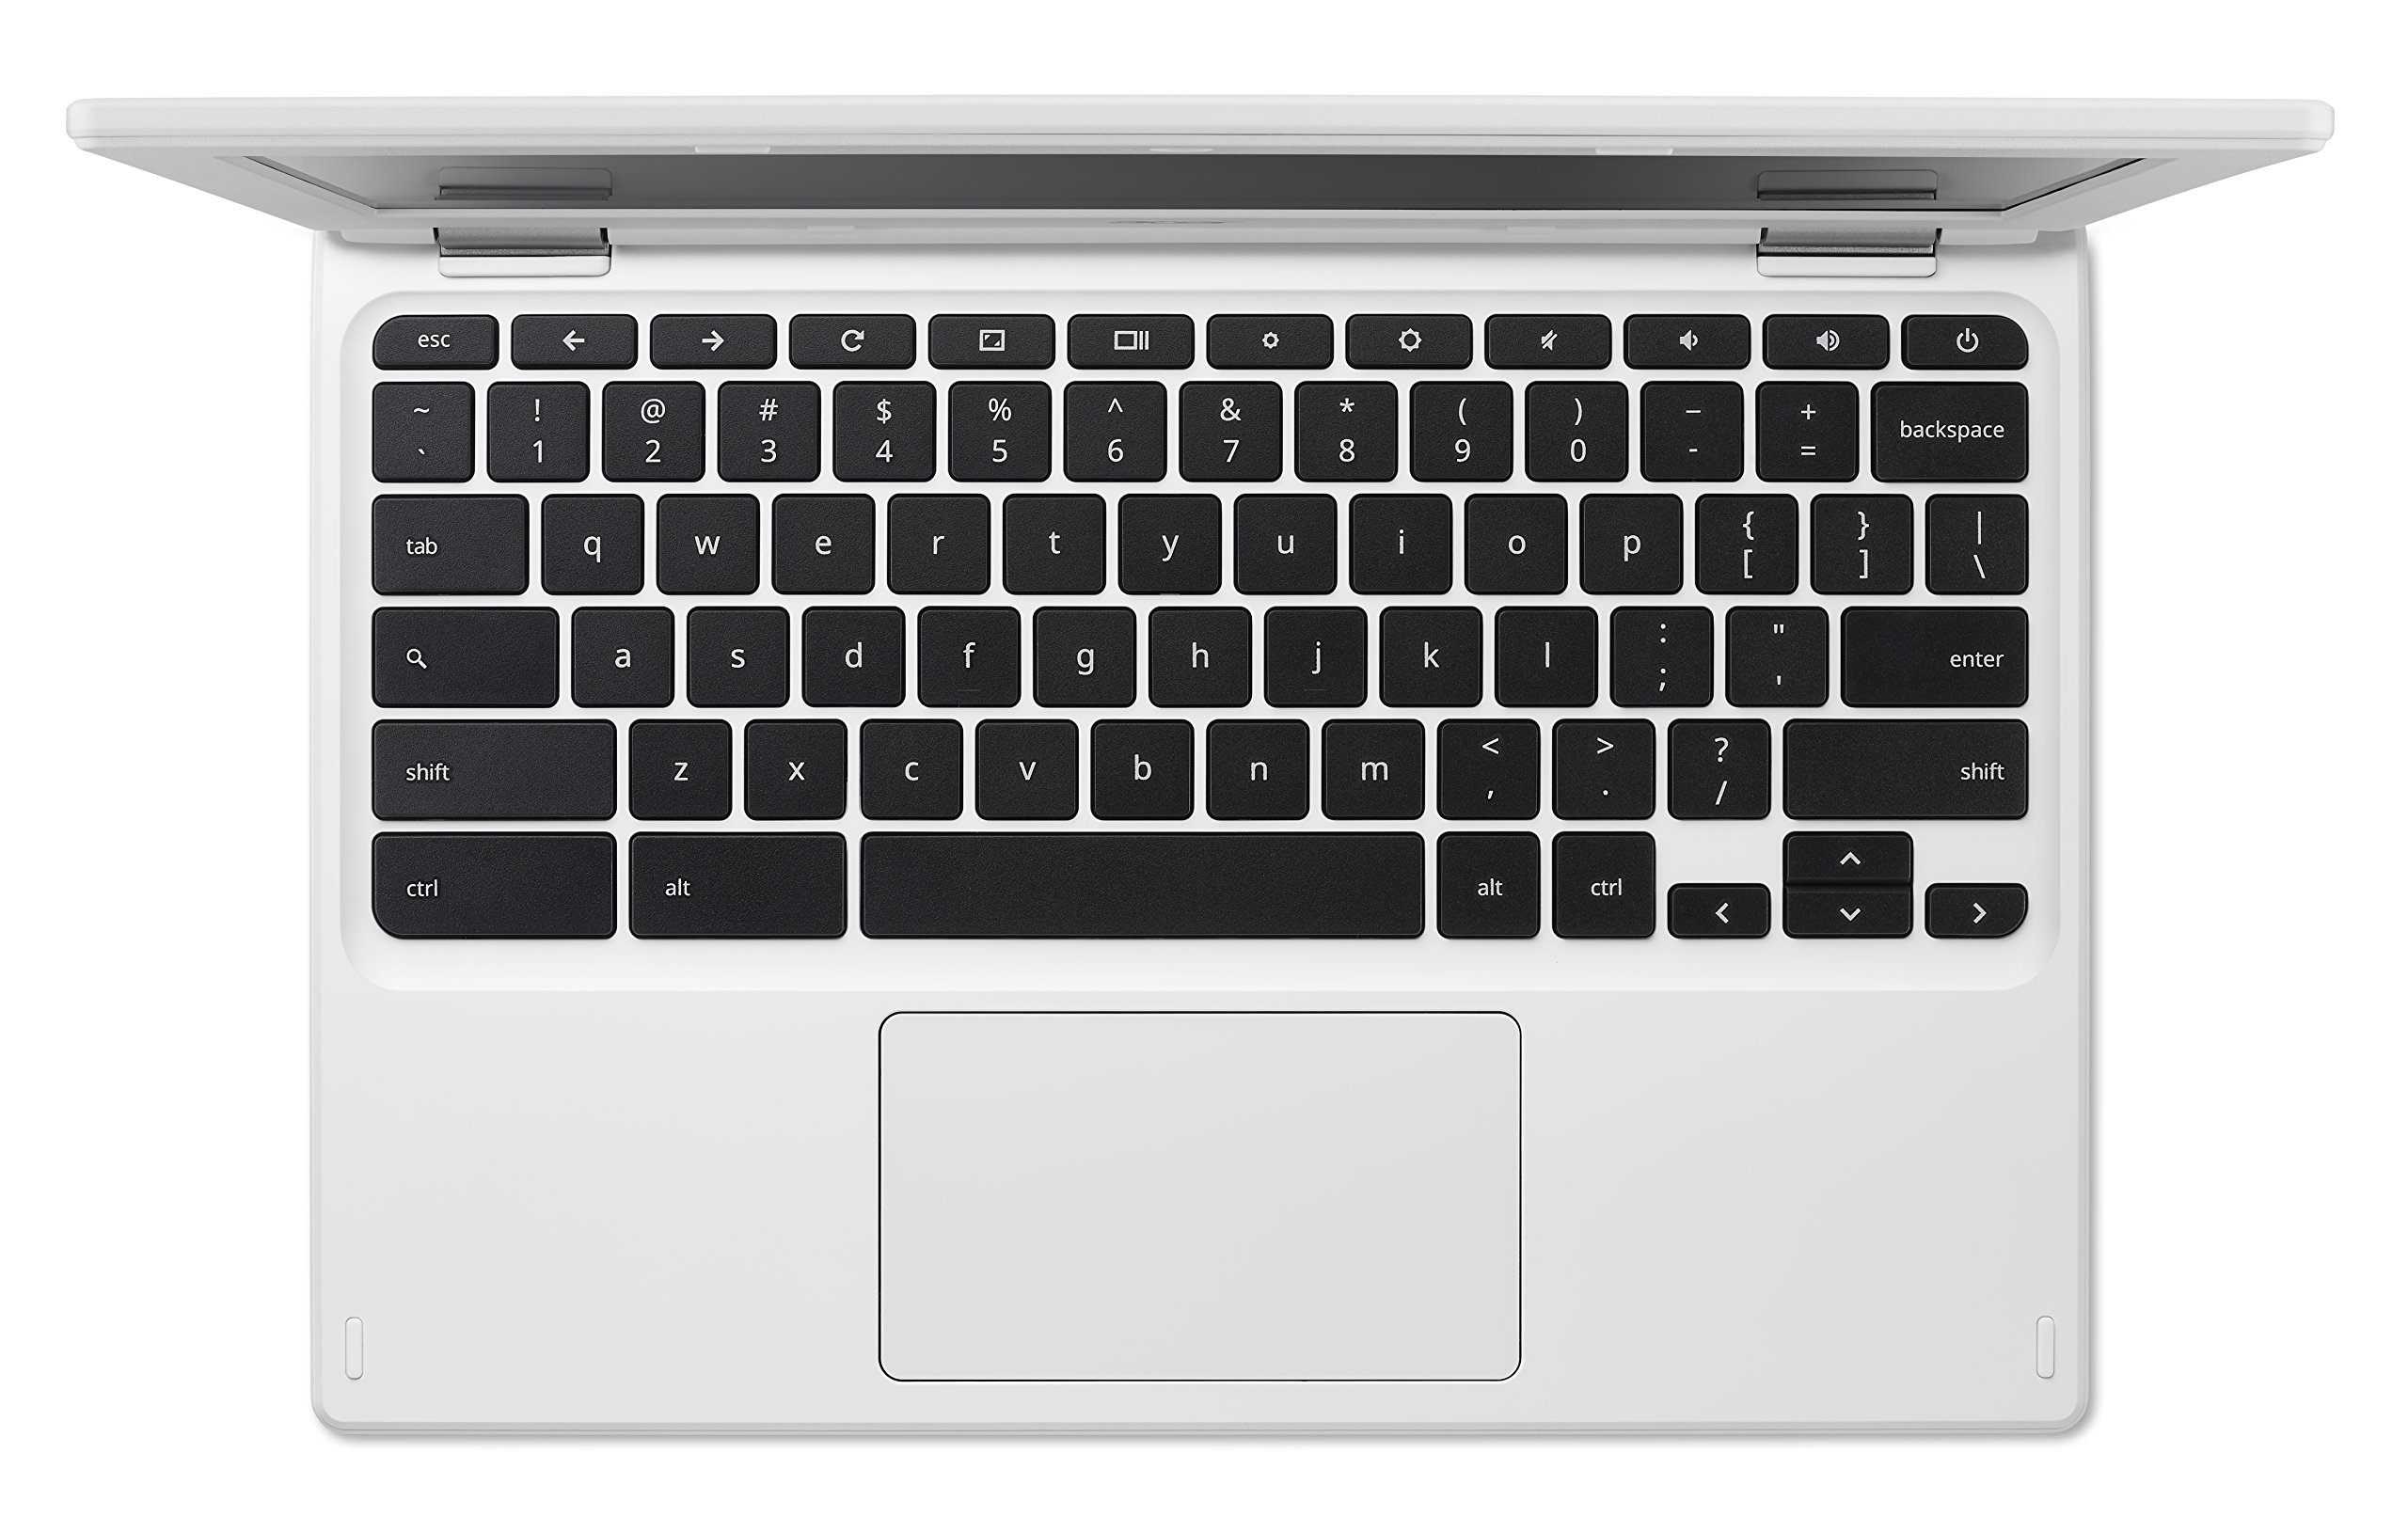 Acer Chromebook 11, Celeron N3060, 11.6